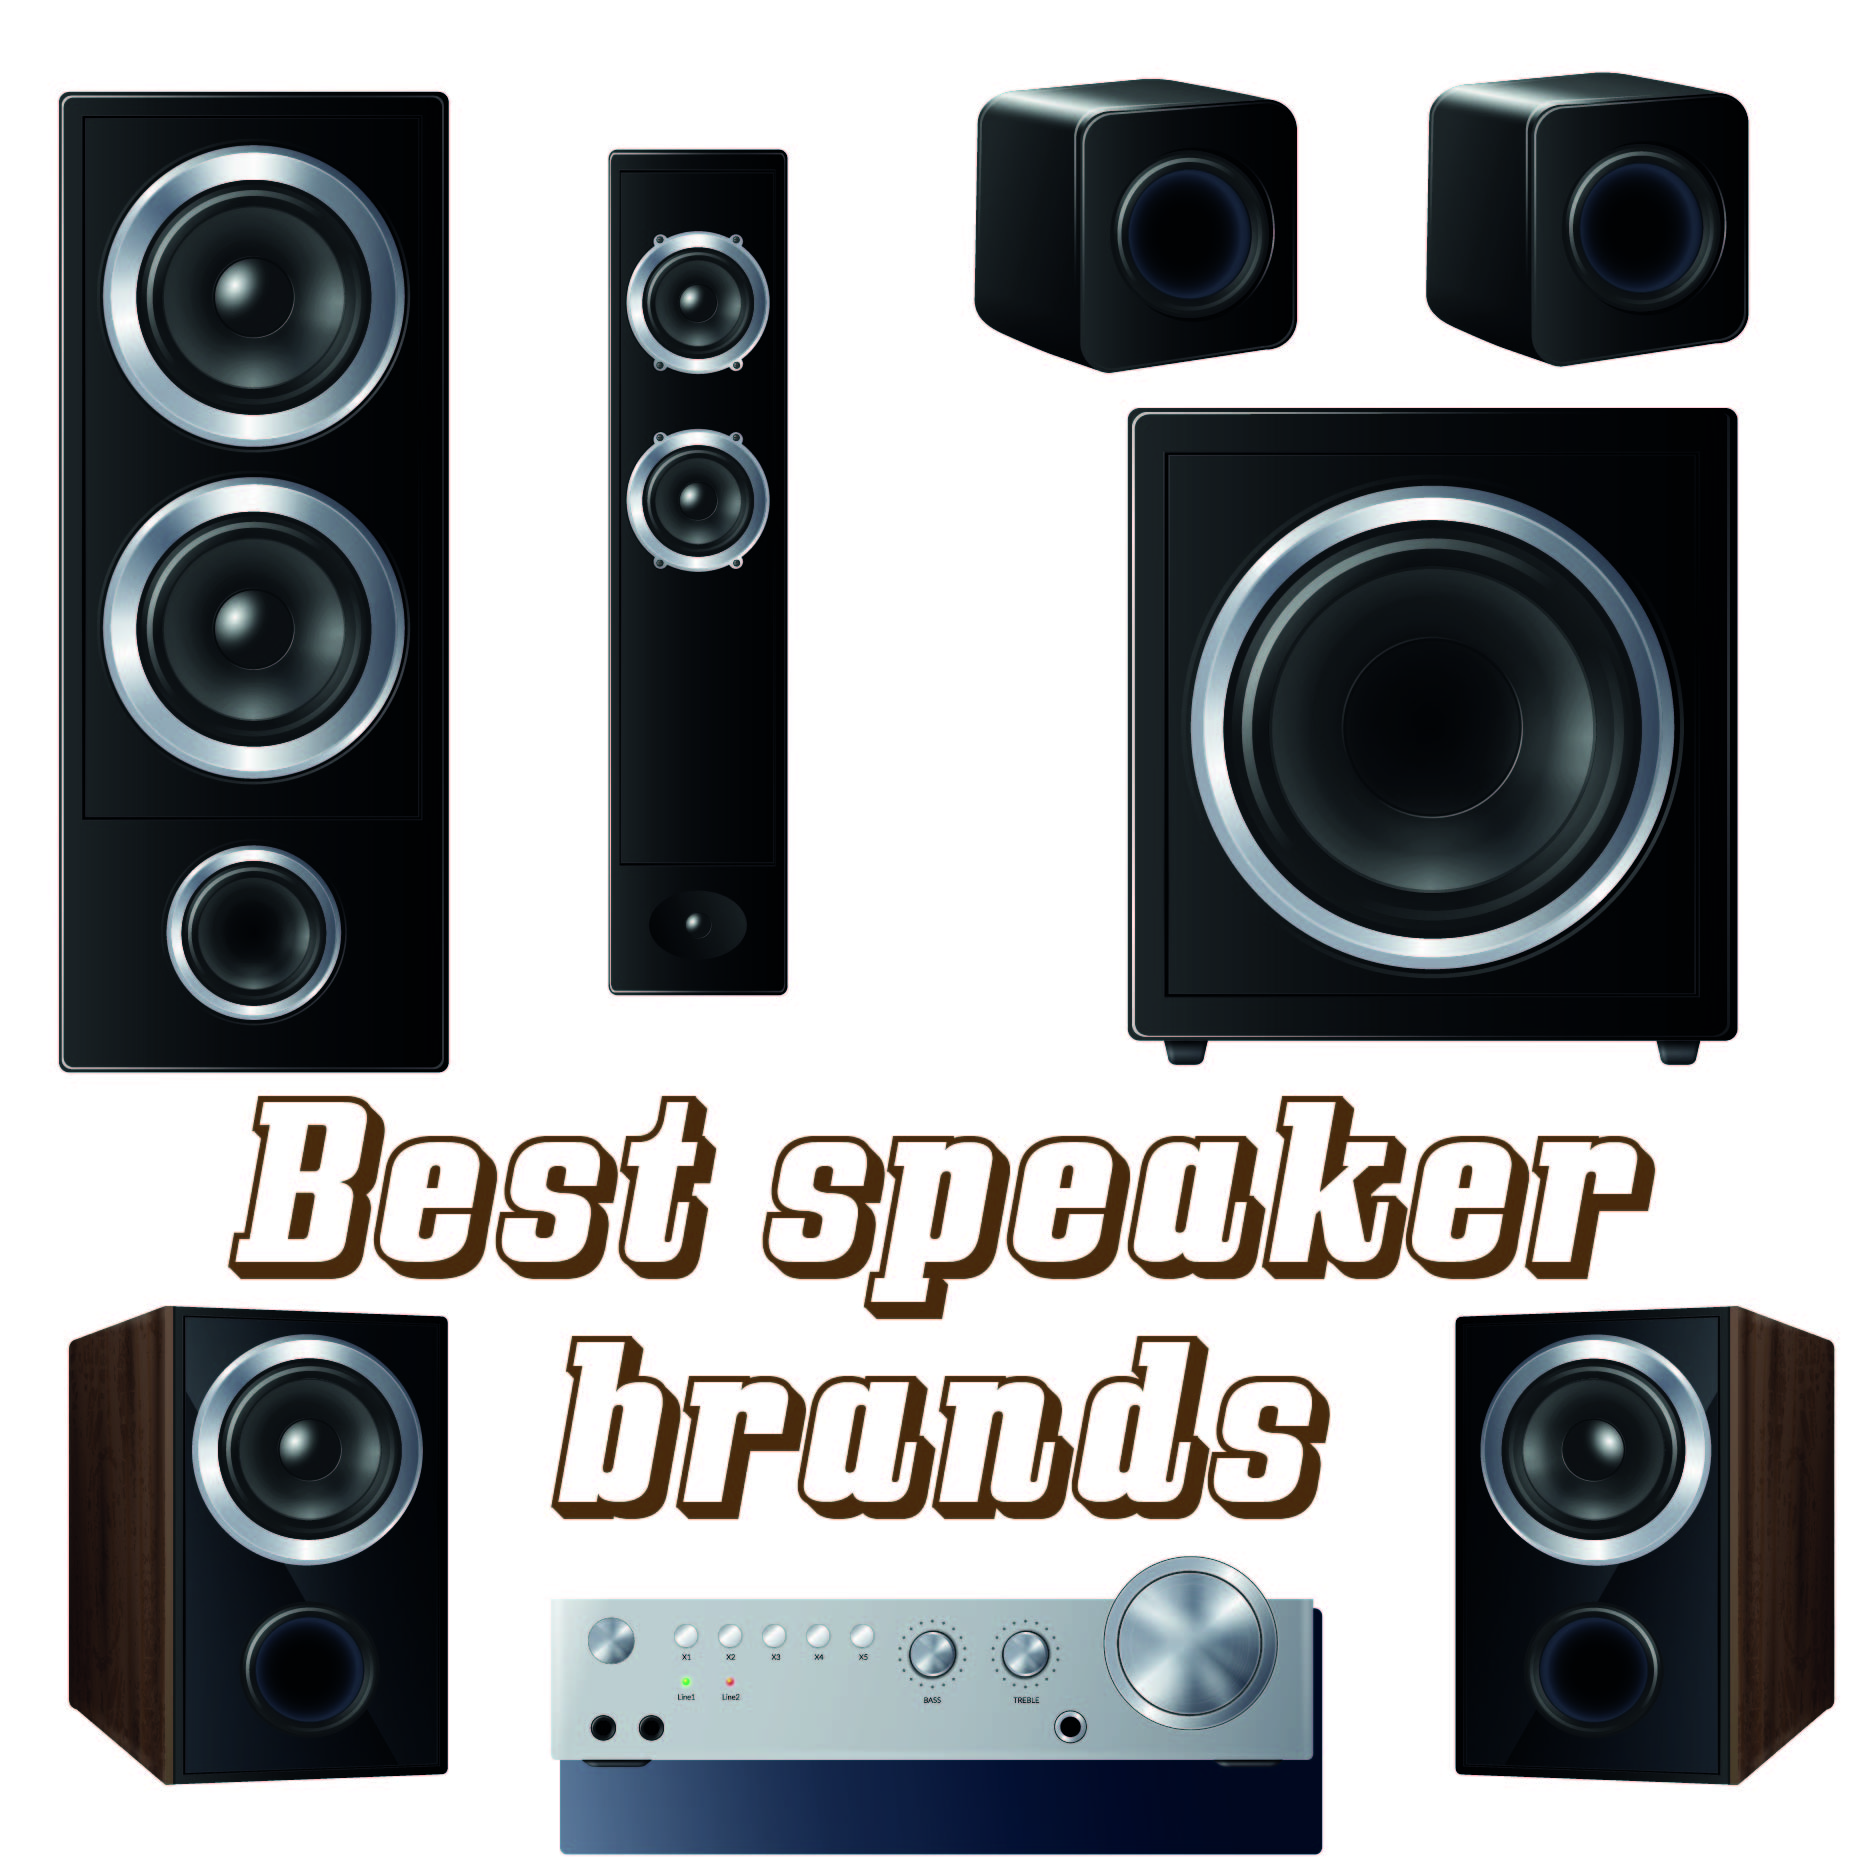 Best speaker brands